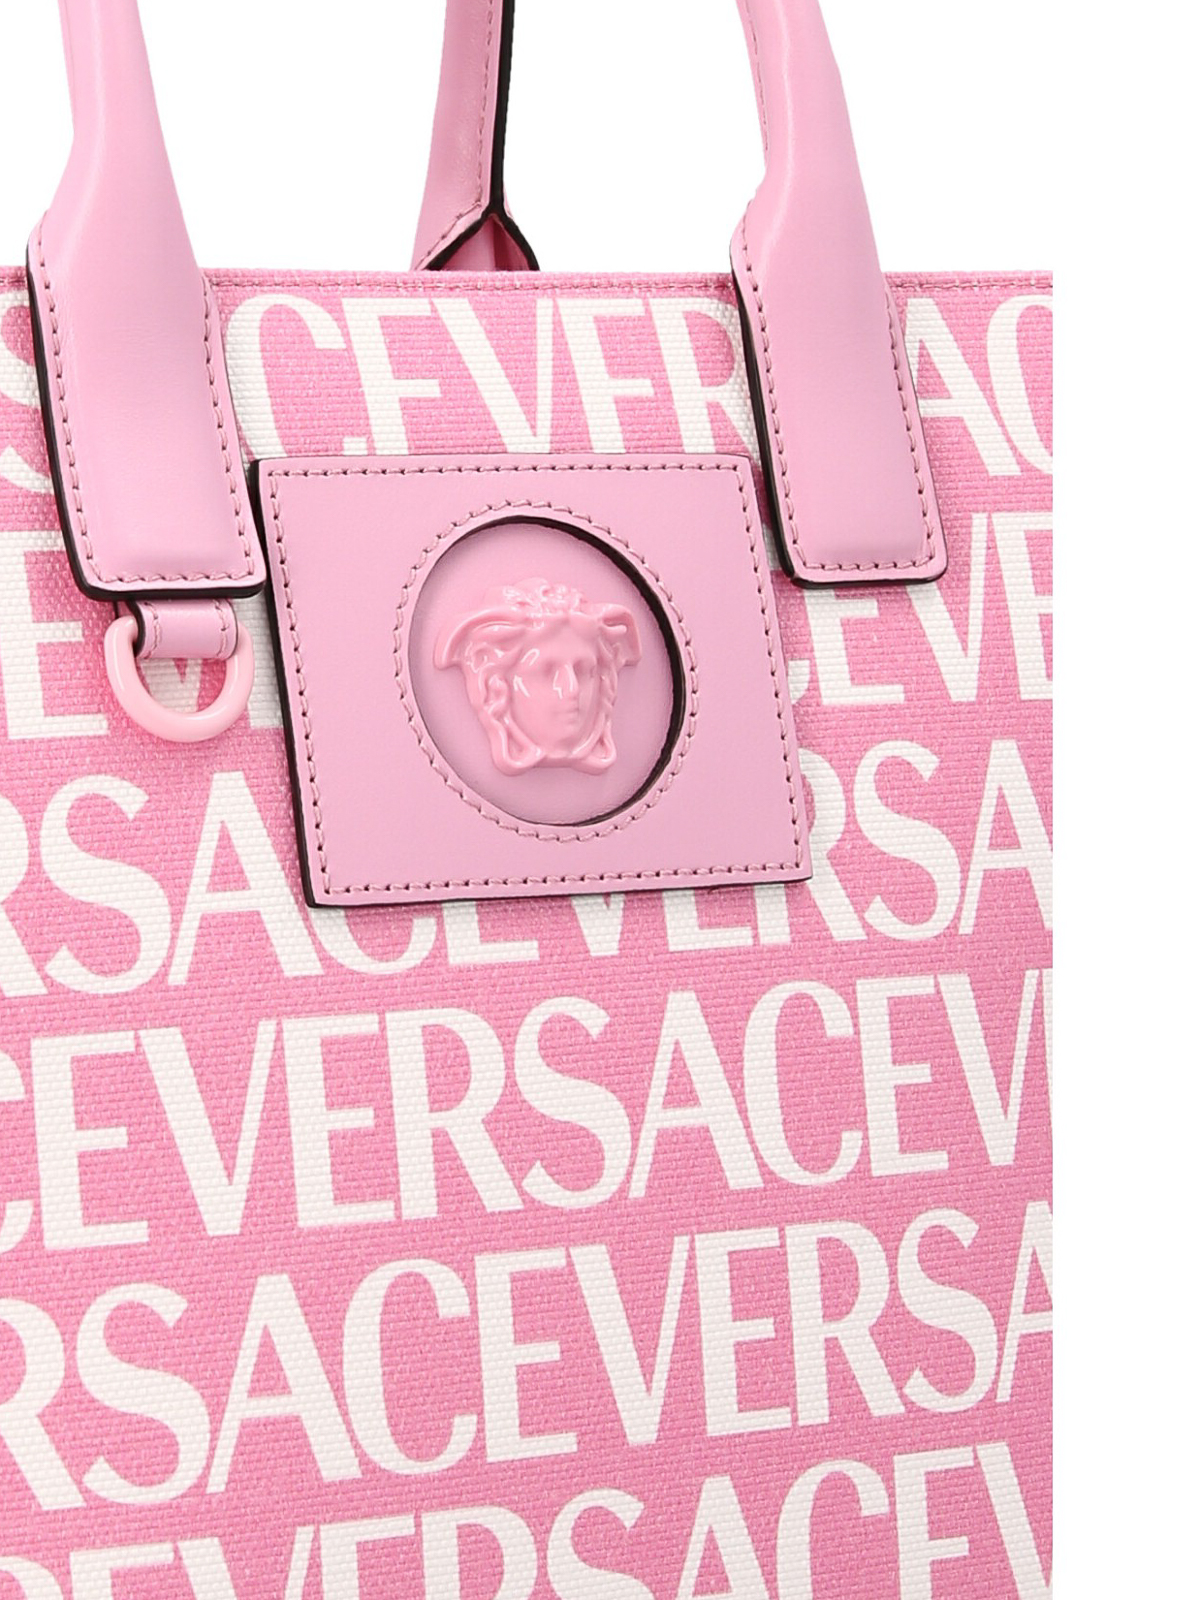 Versace  Pink bags outfit, Versace bag, Versace handbags